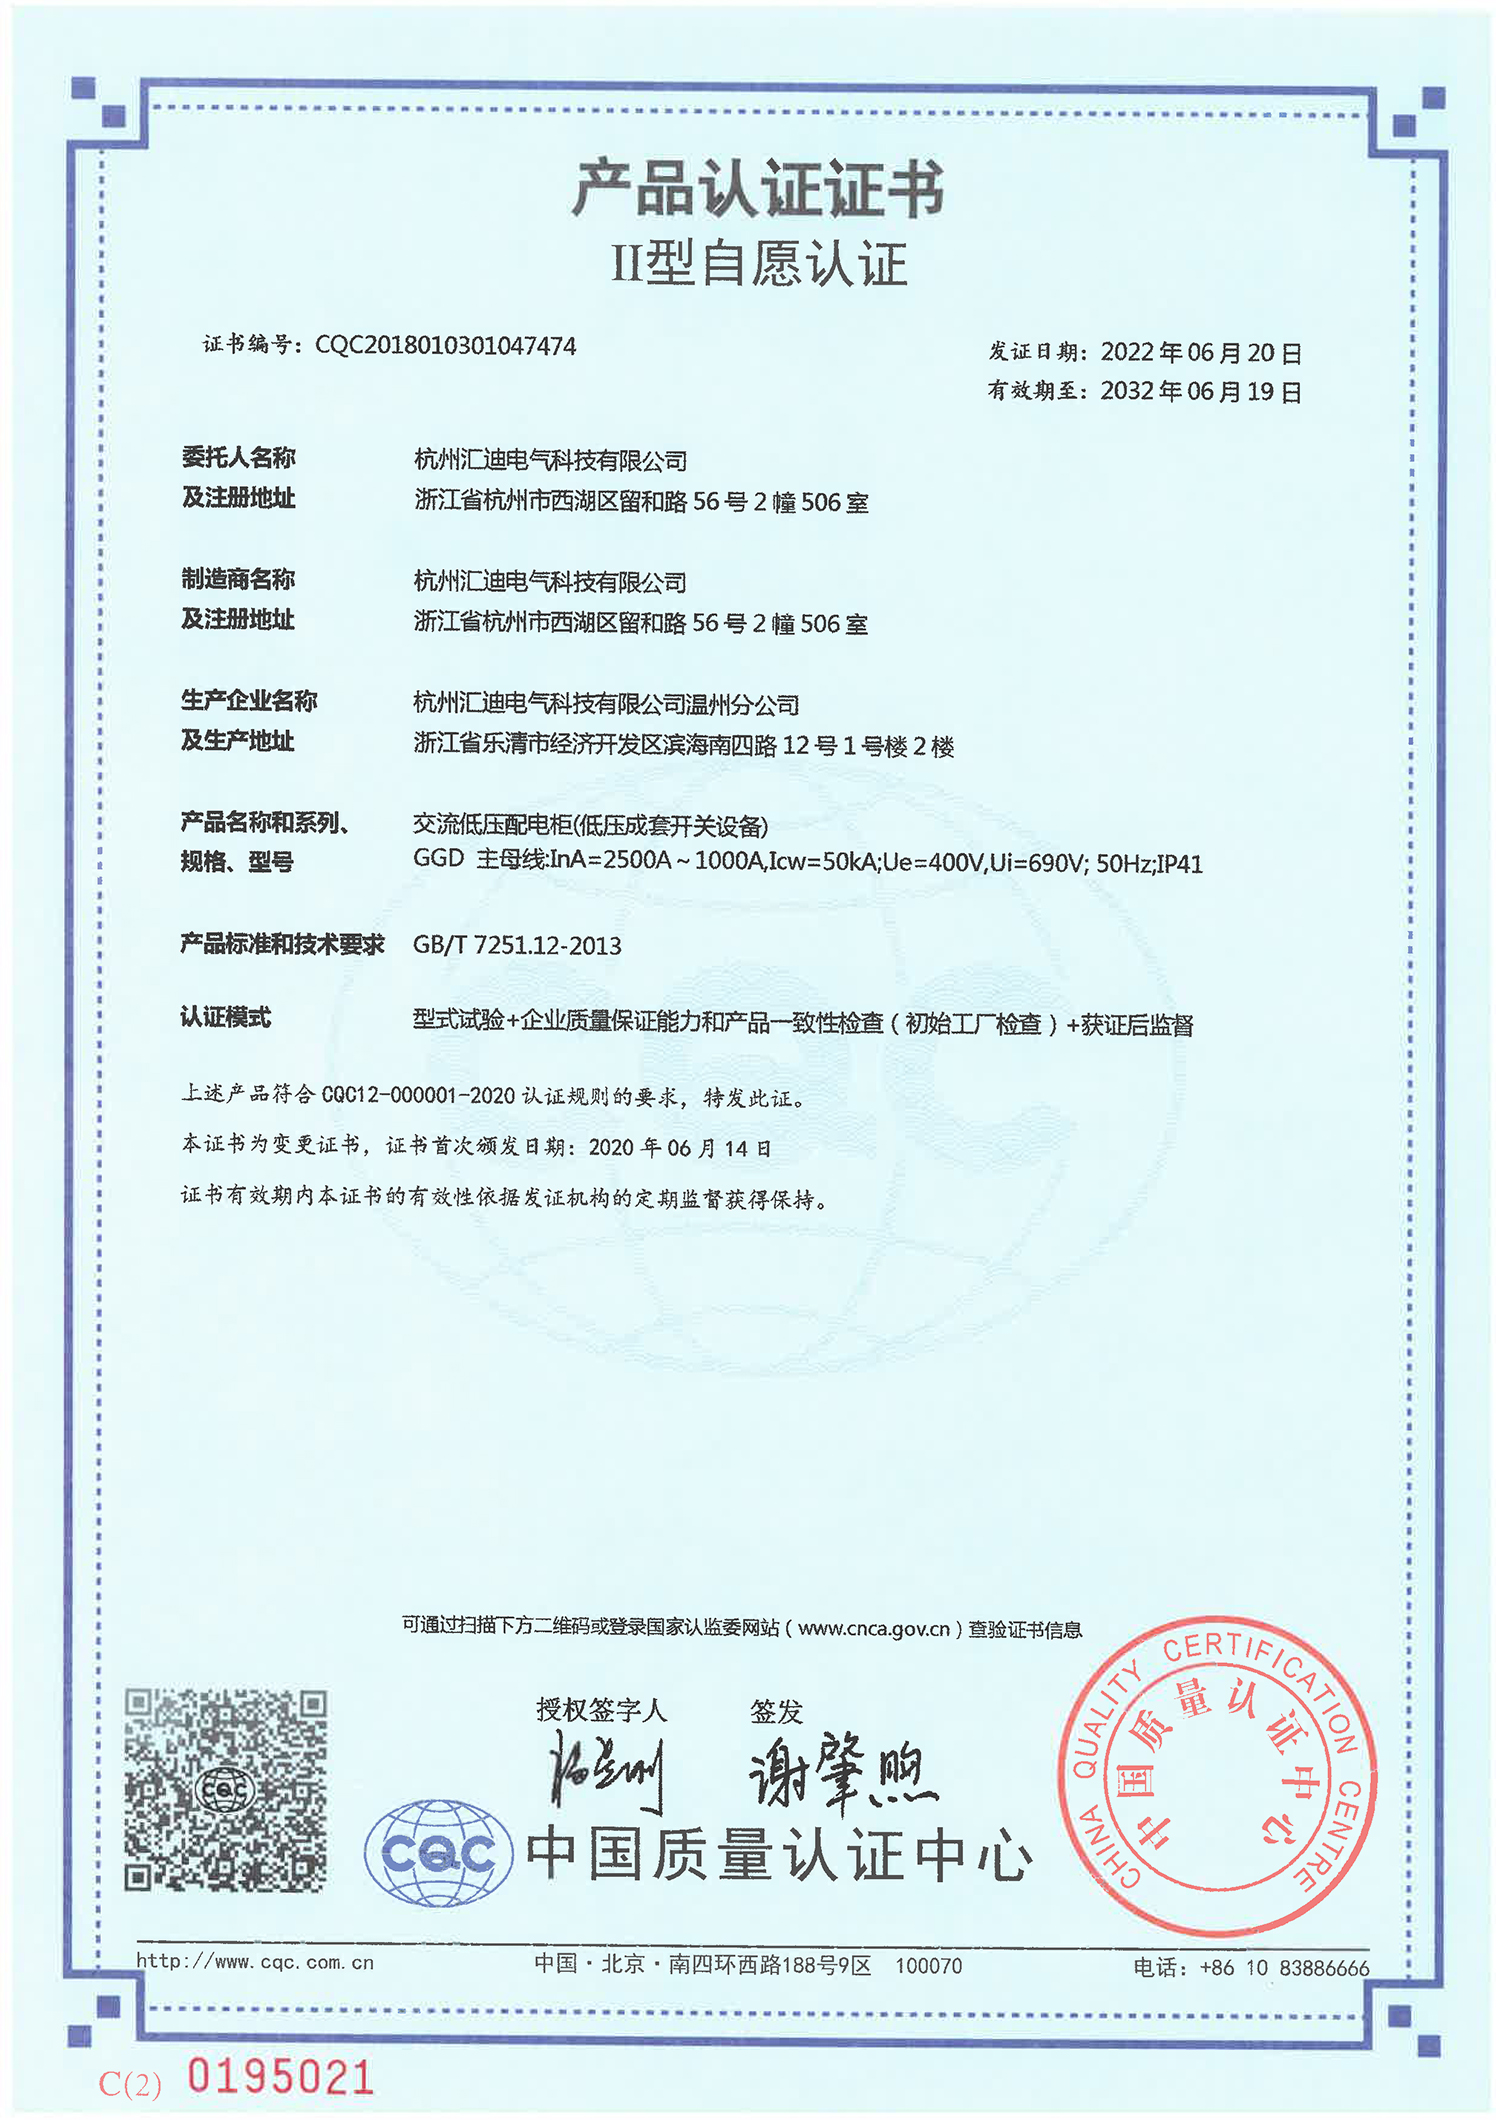 huud certificate 3